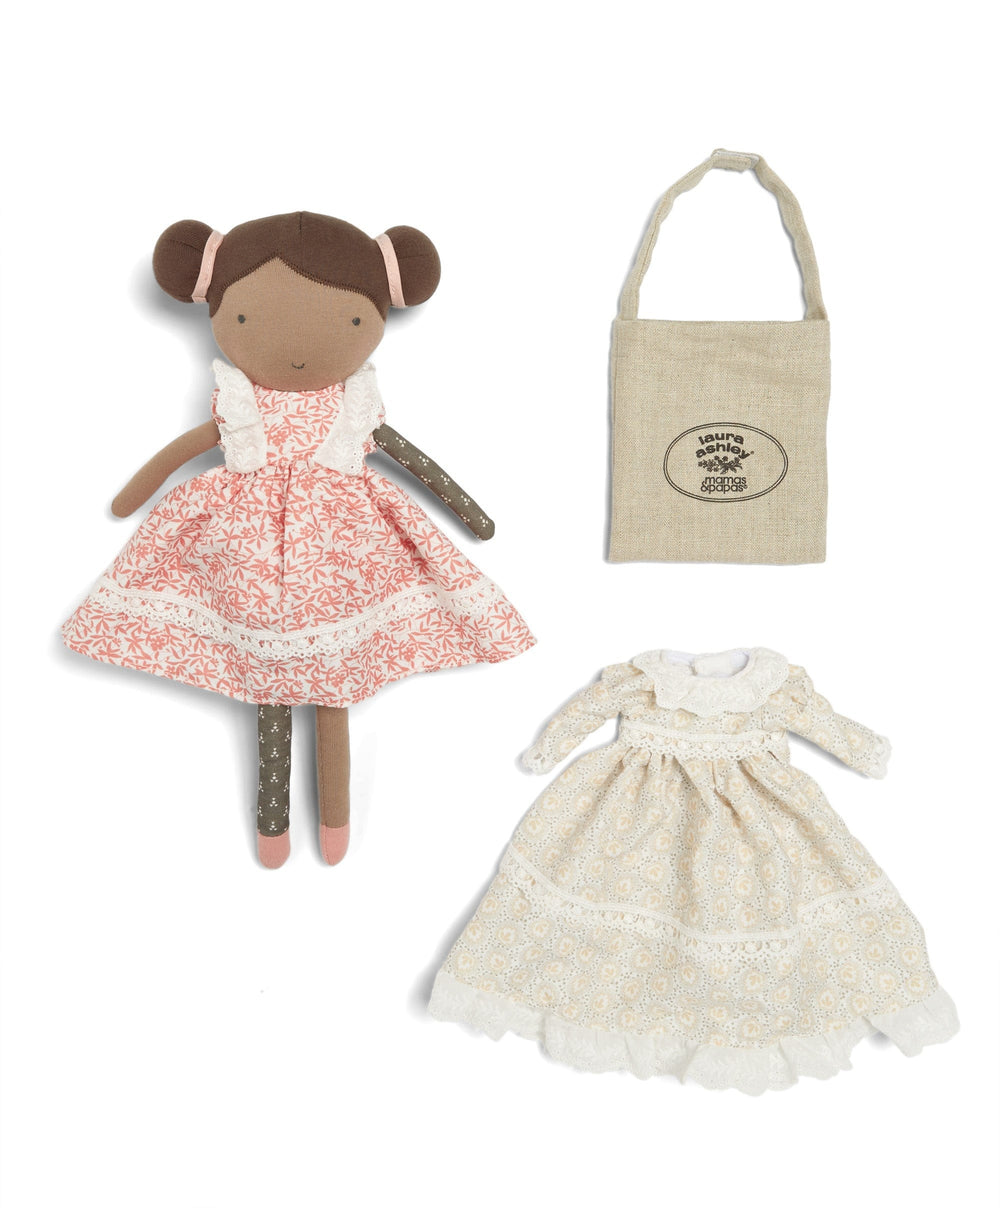 Mamas & Papas Soft Toys Laura Ashley Dress Up Doll - Kitty